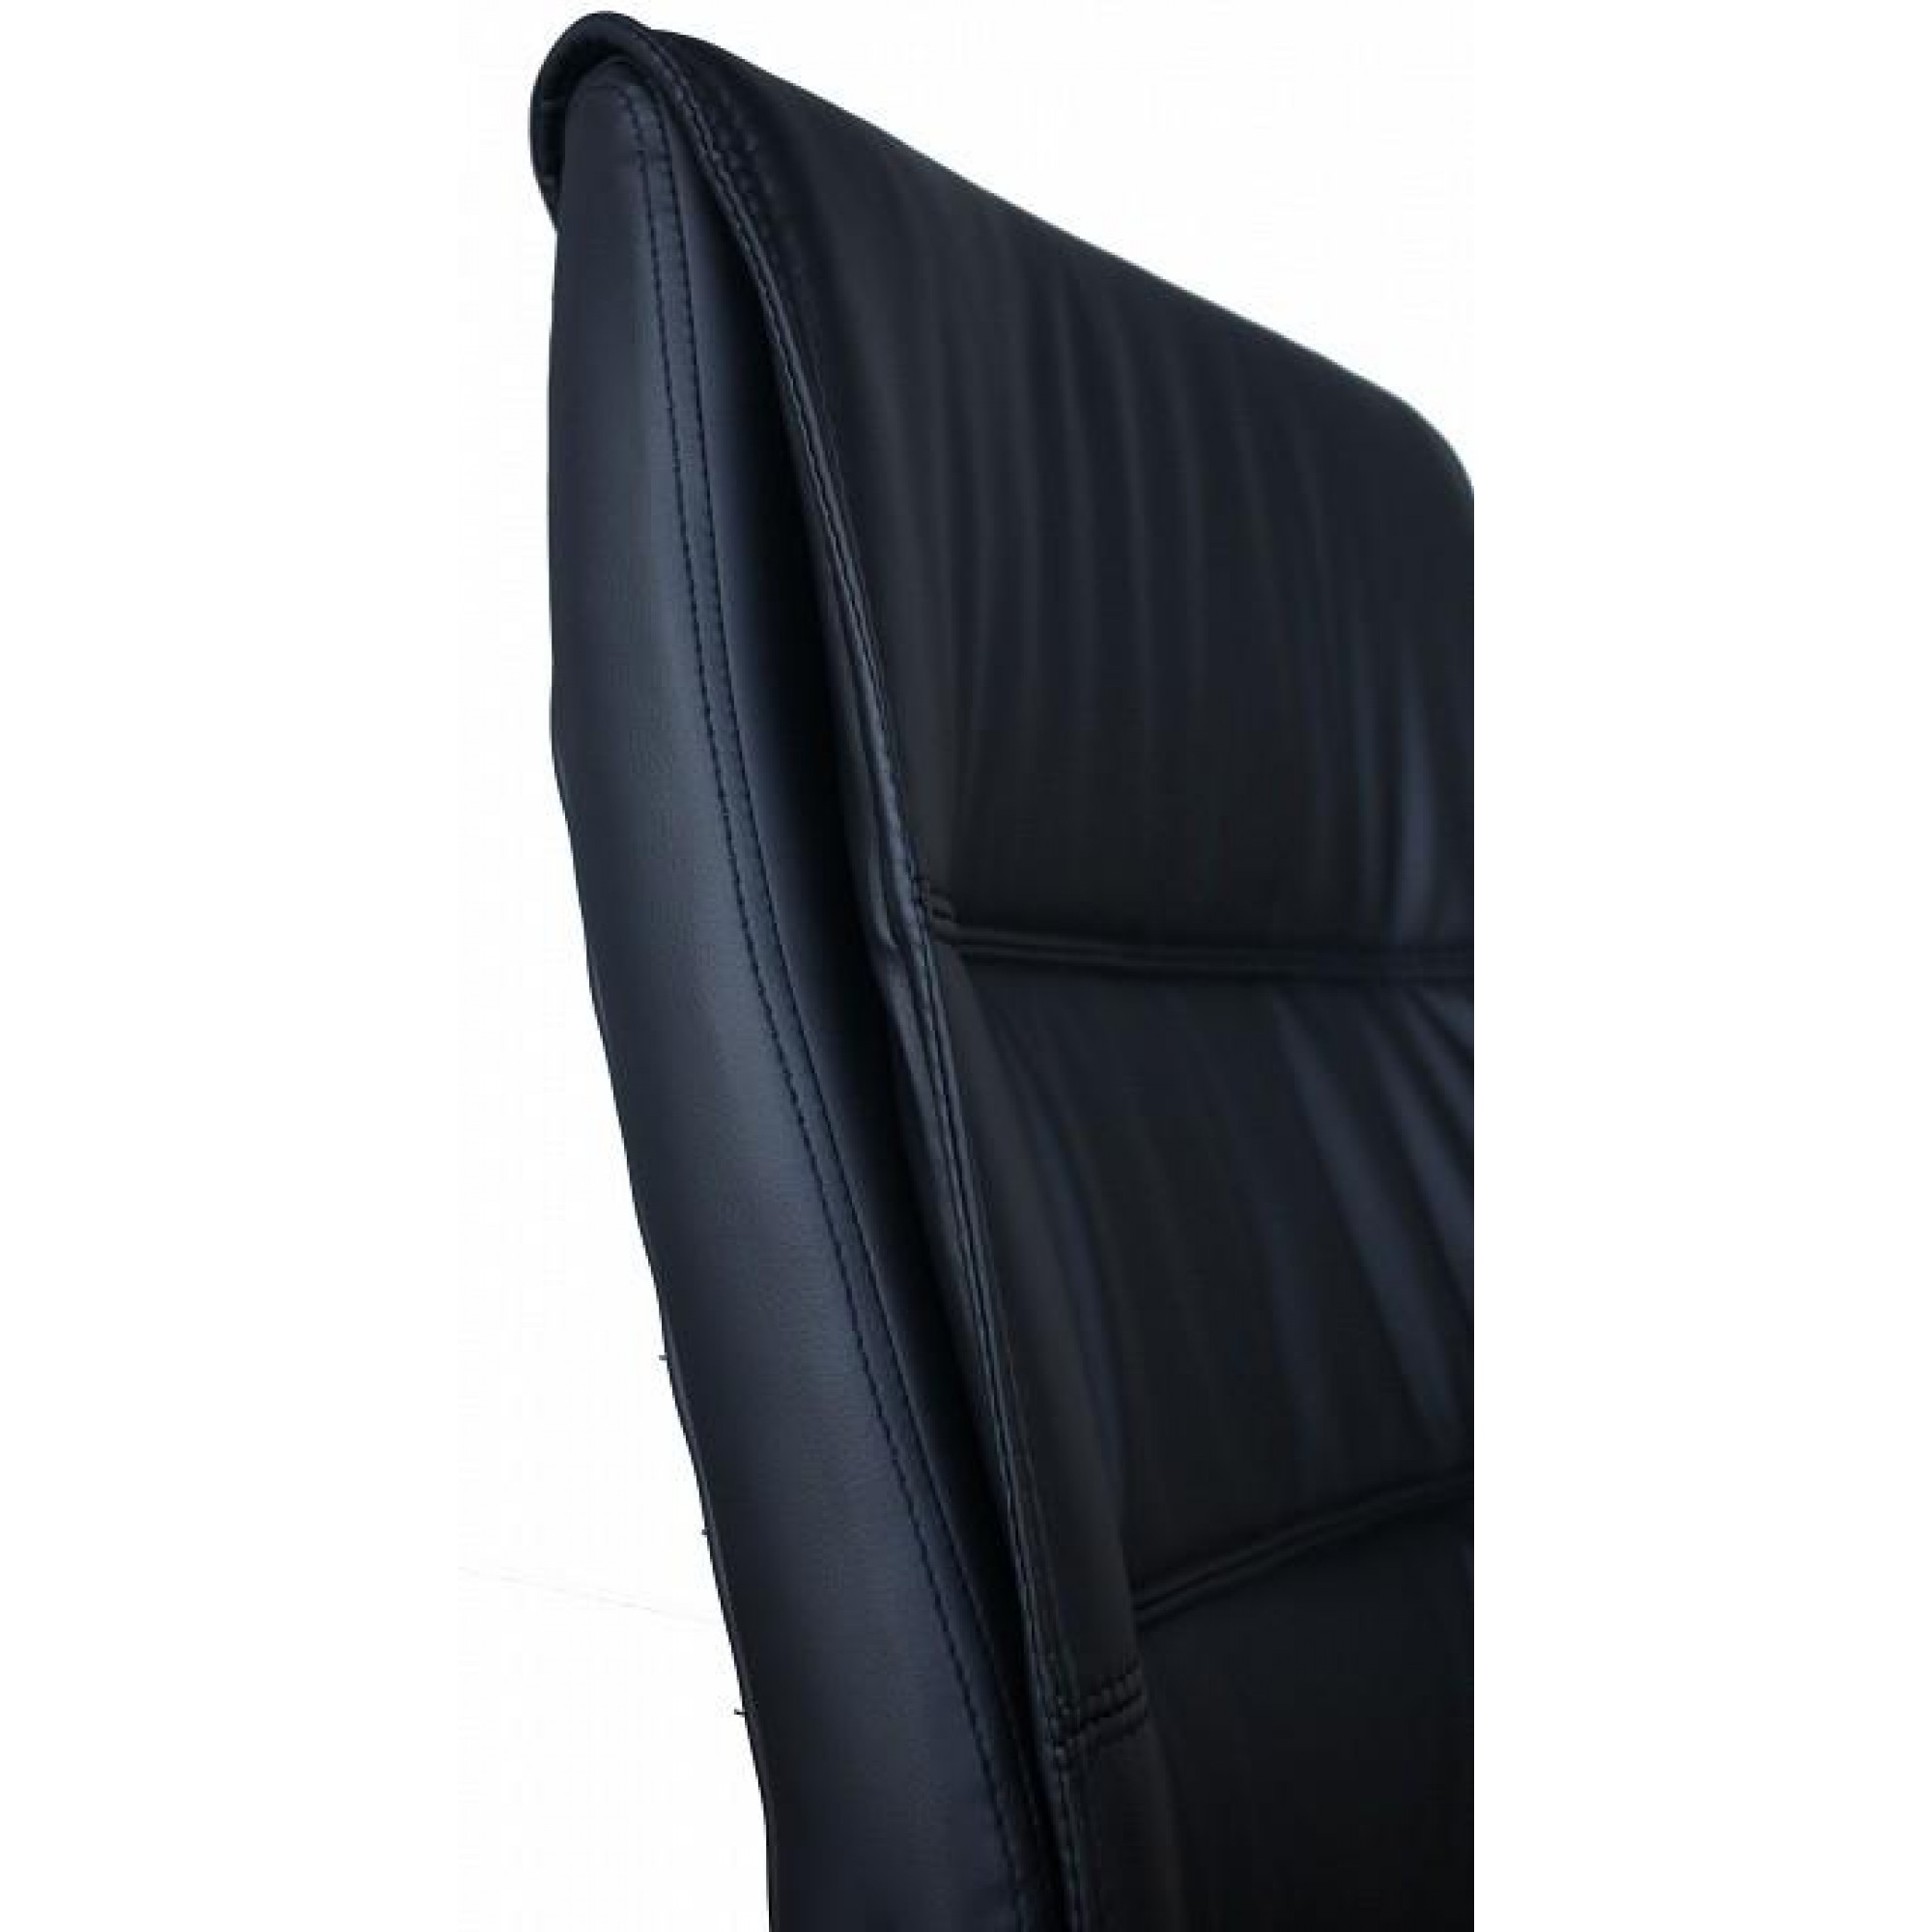 Кресло компьютерное MF-333A 405816, MF-333A black